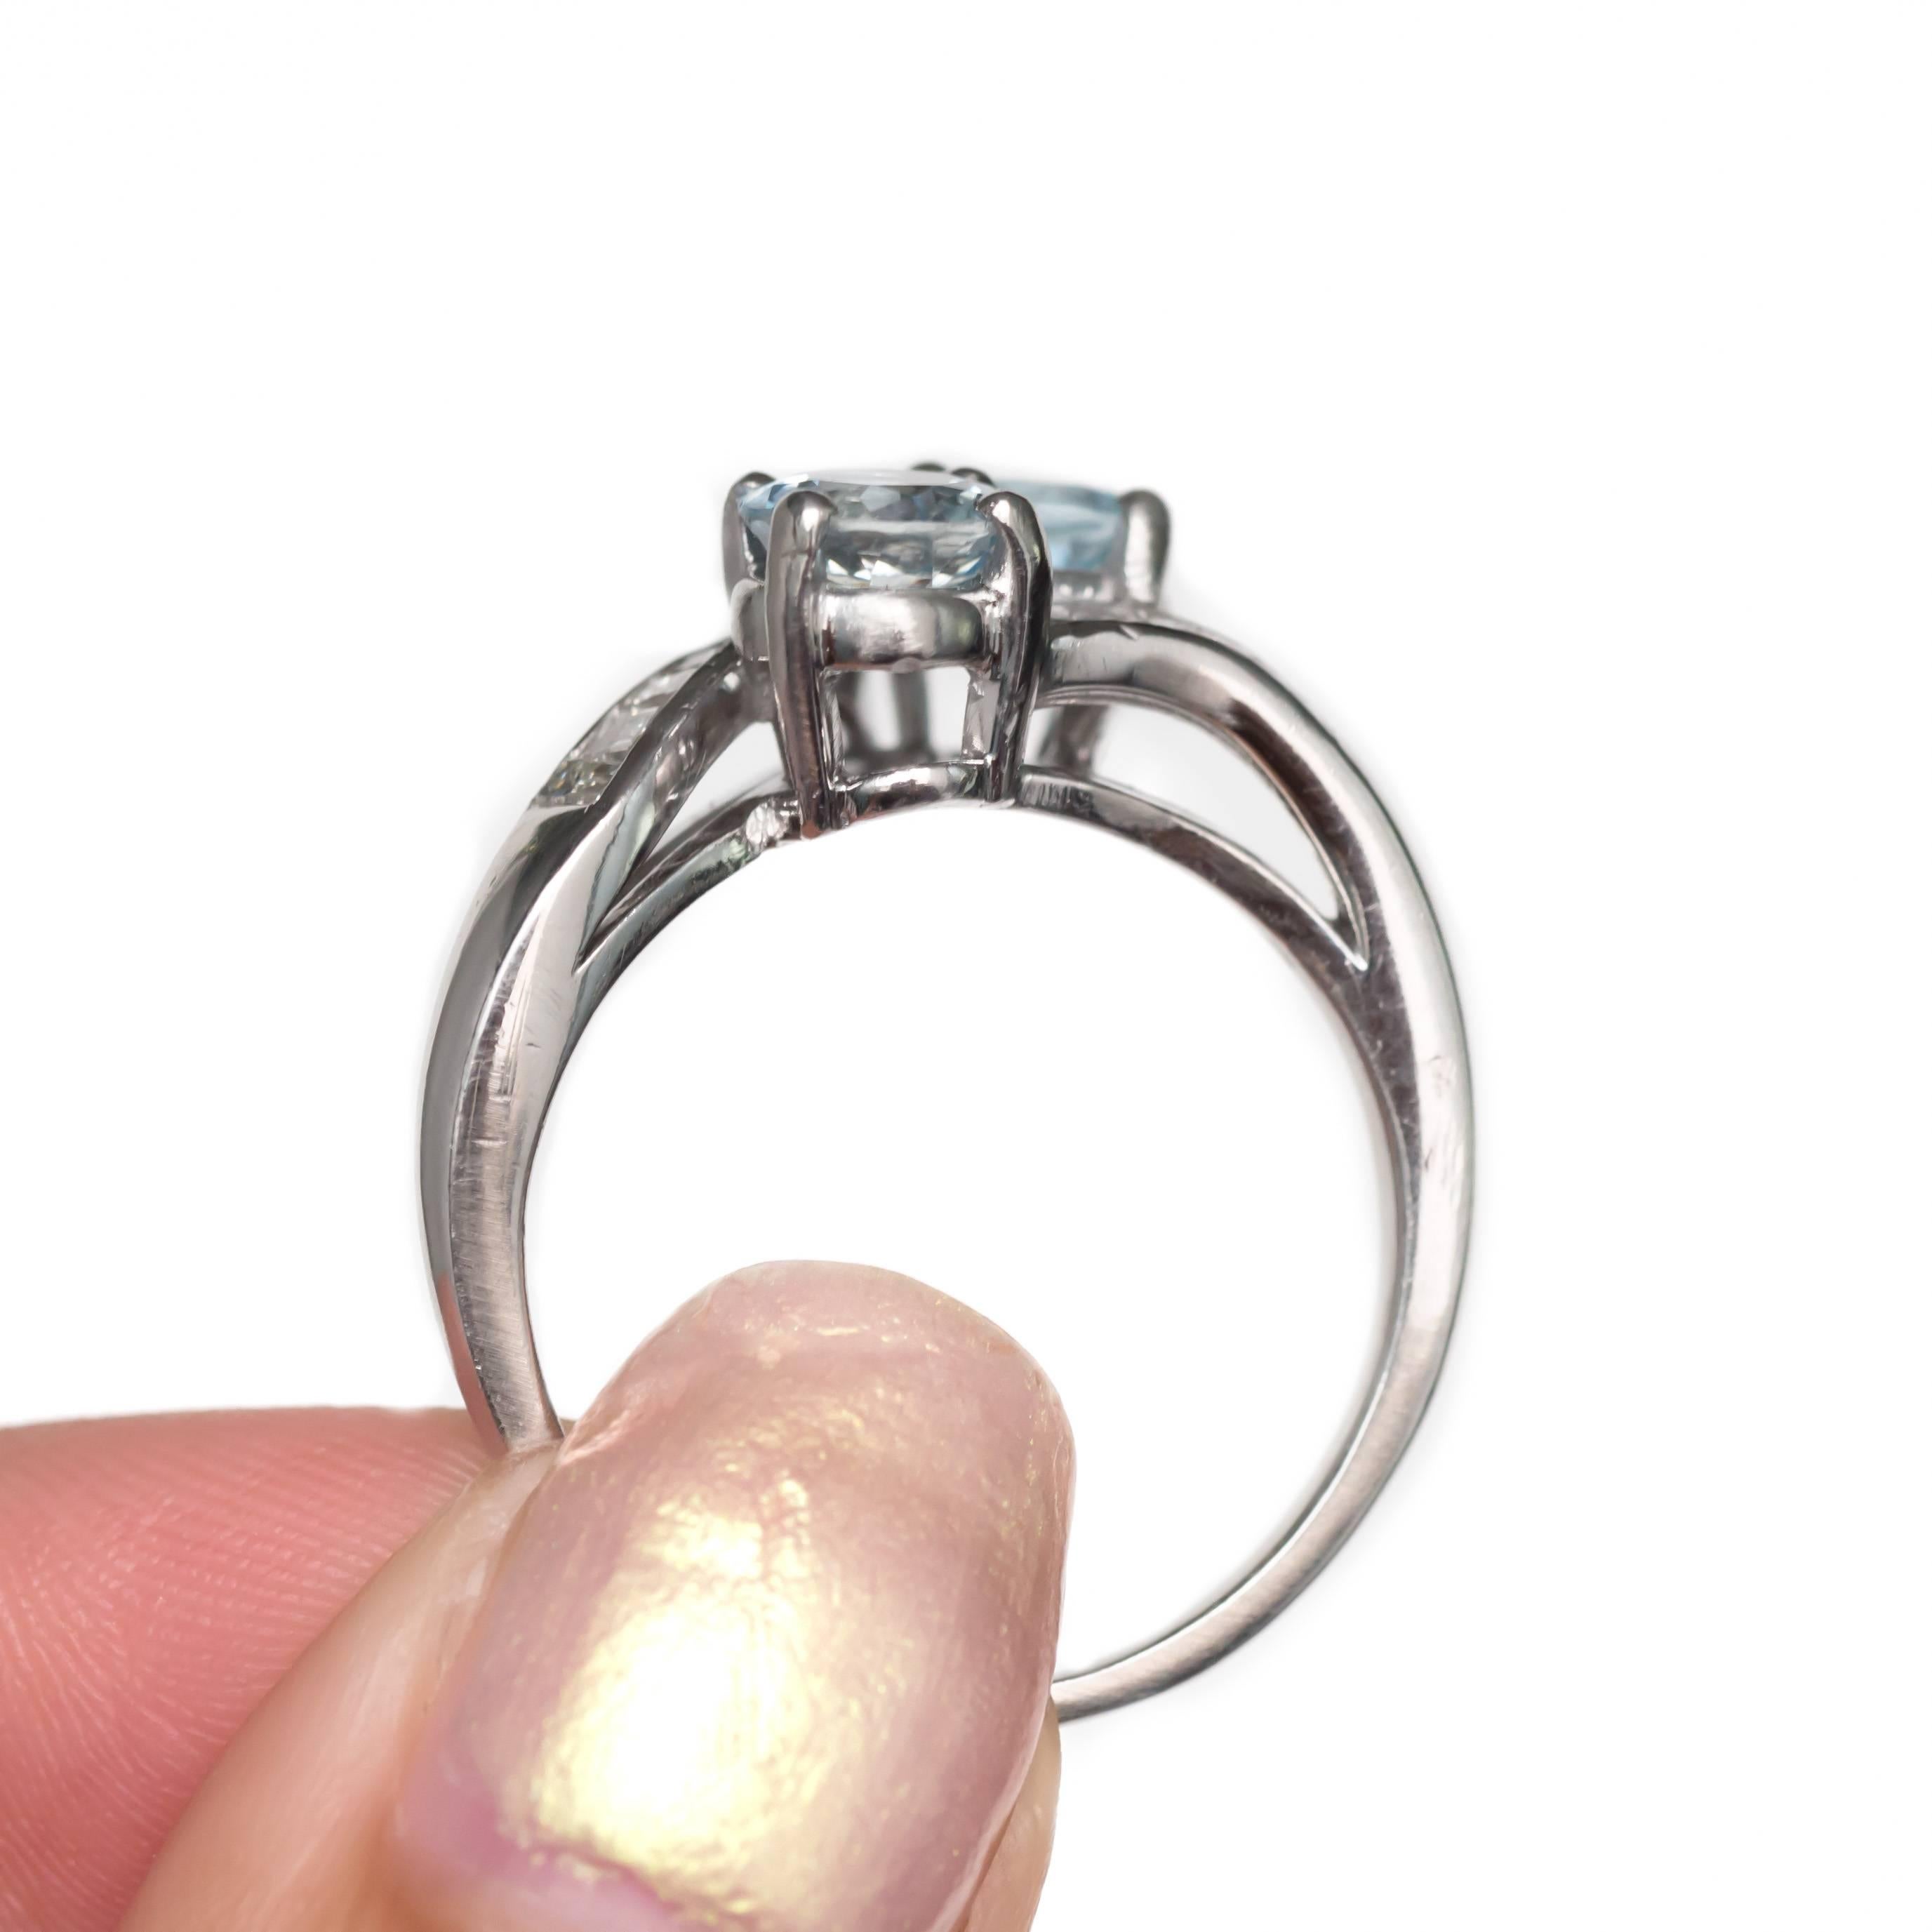 60 karat diamond ring